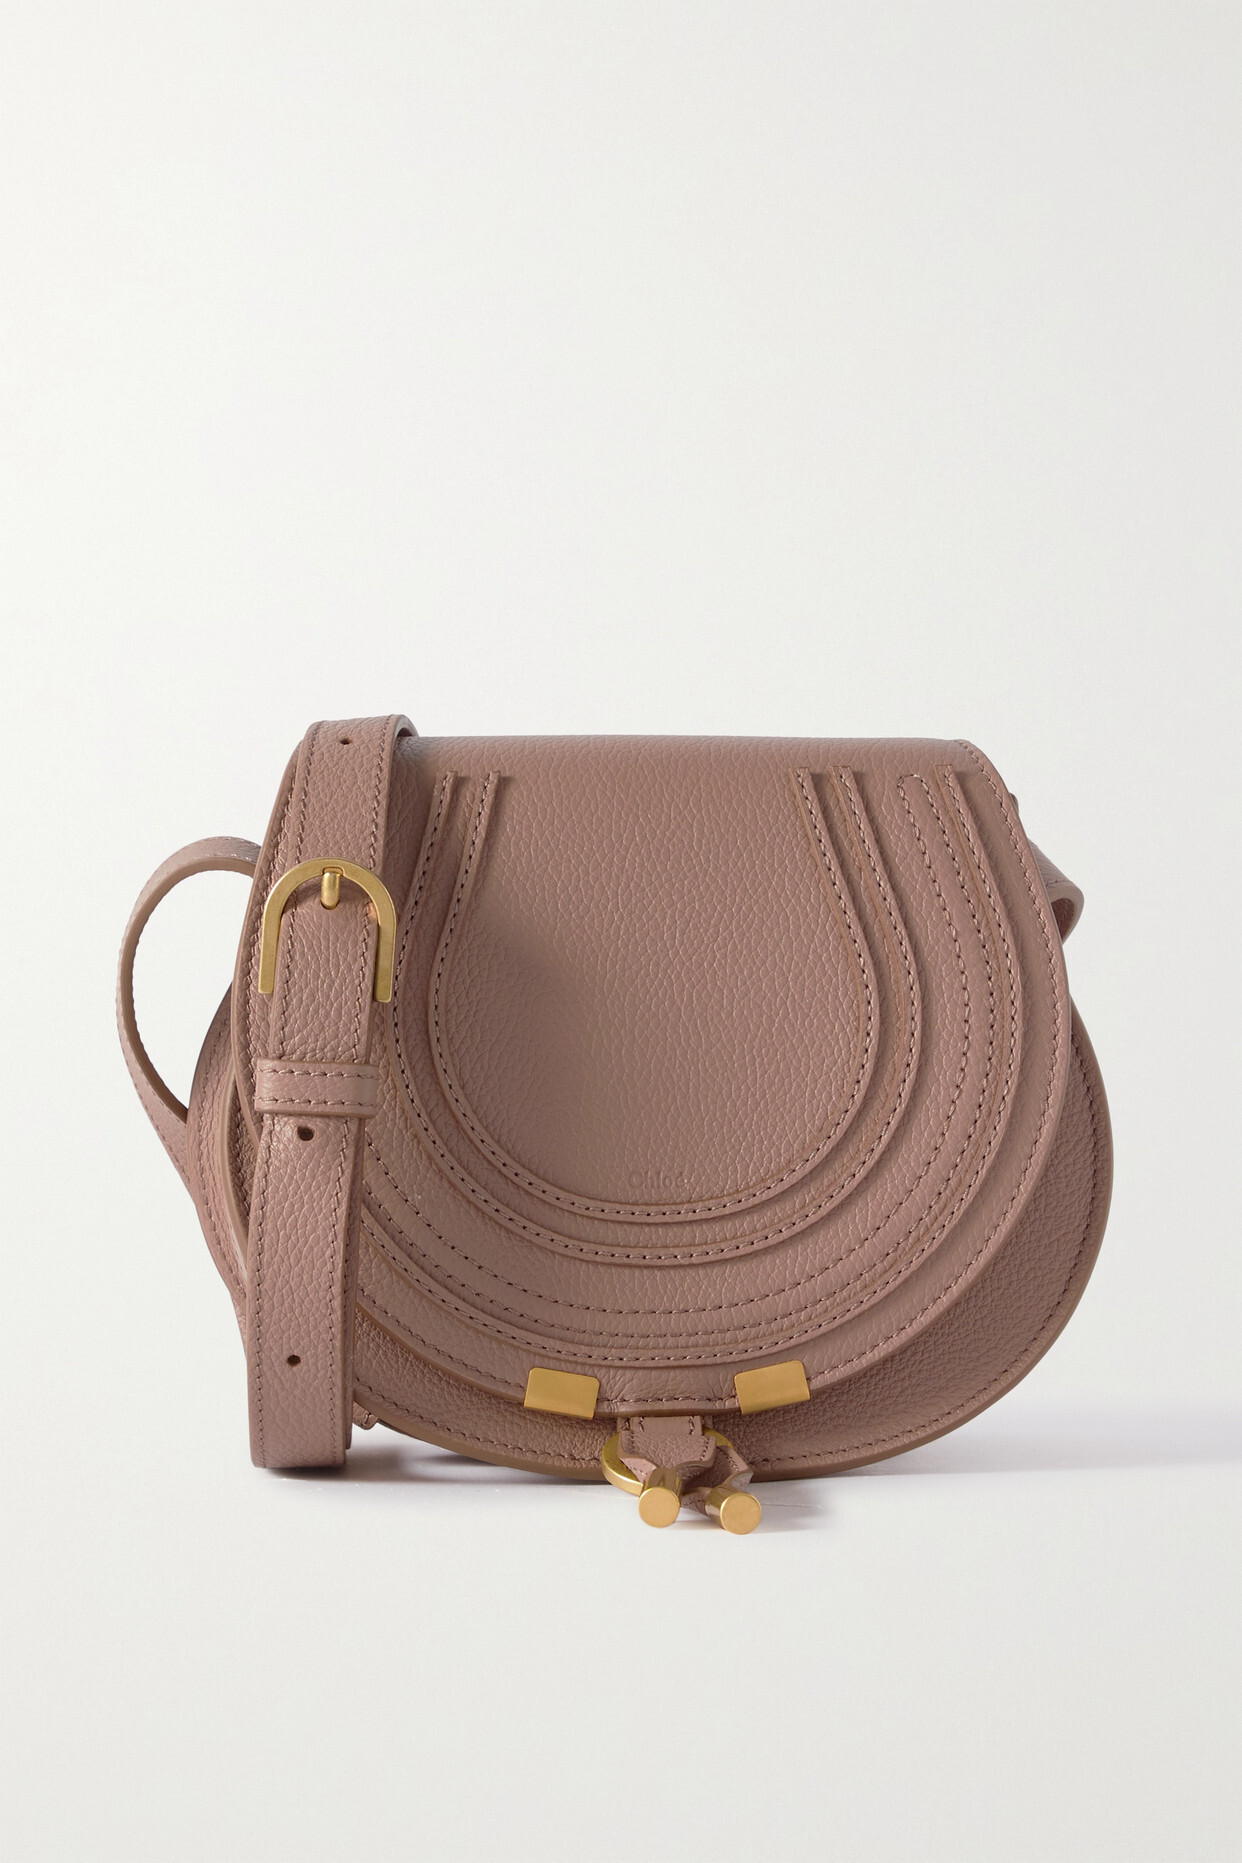 Chloé Chloé - Marcie Mini Textured-leather Shoulder Bag - Pink